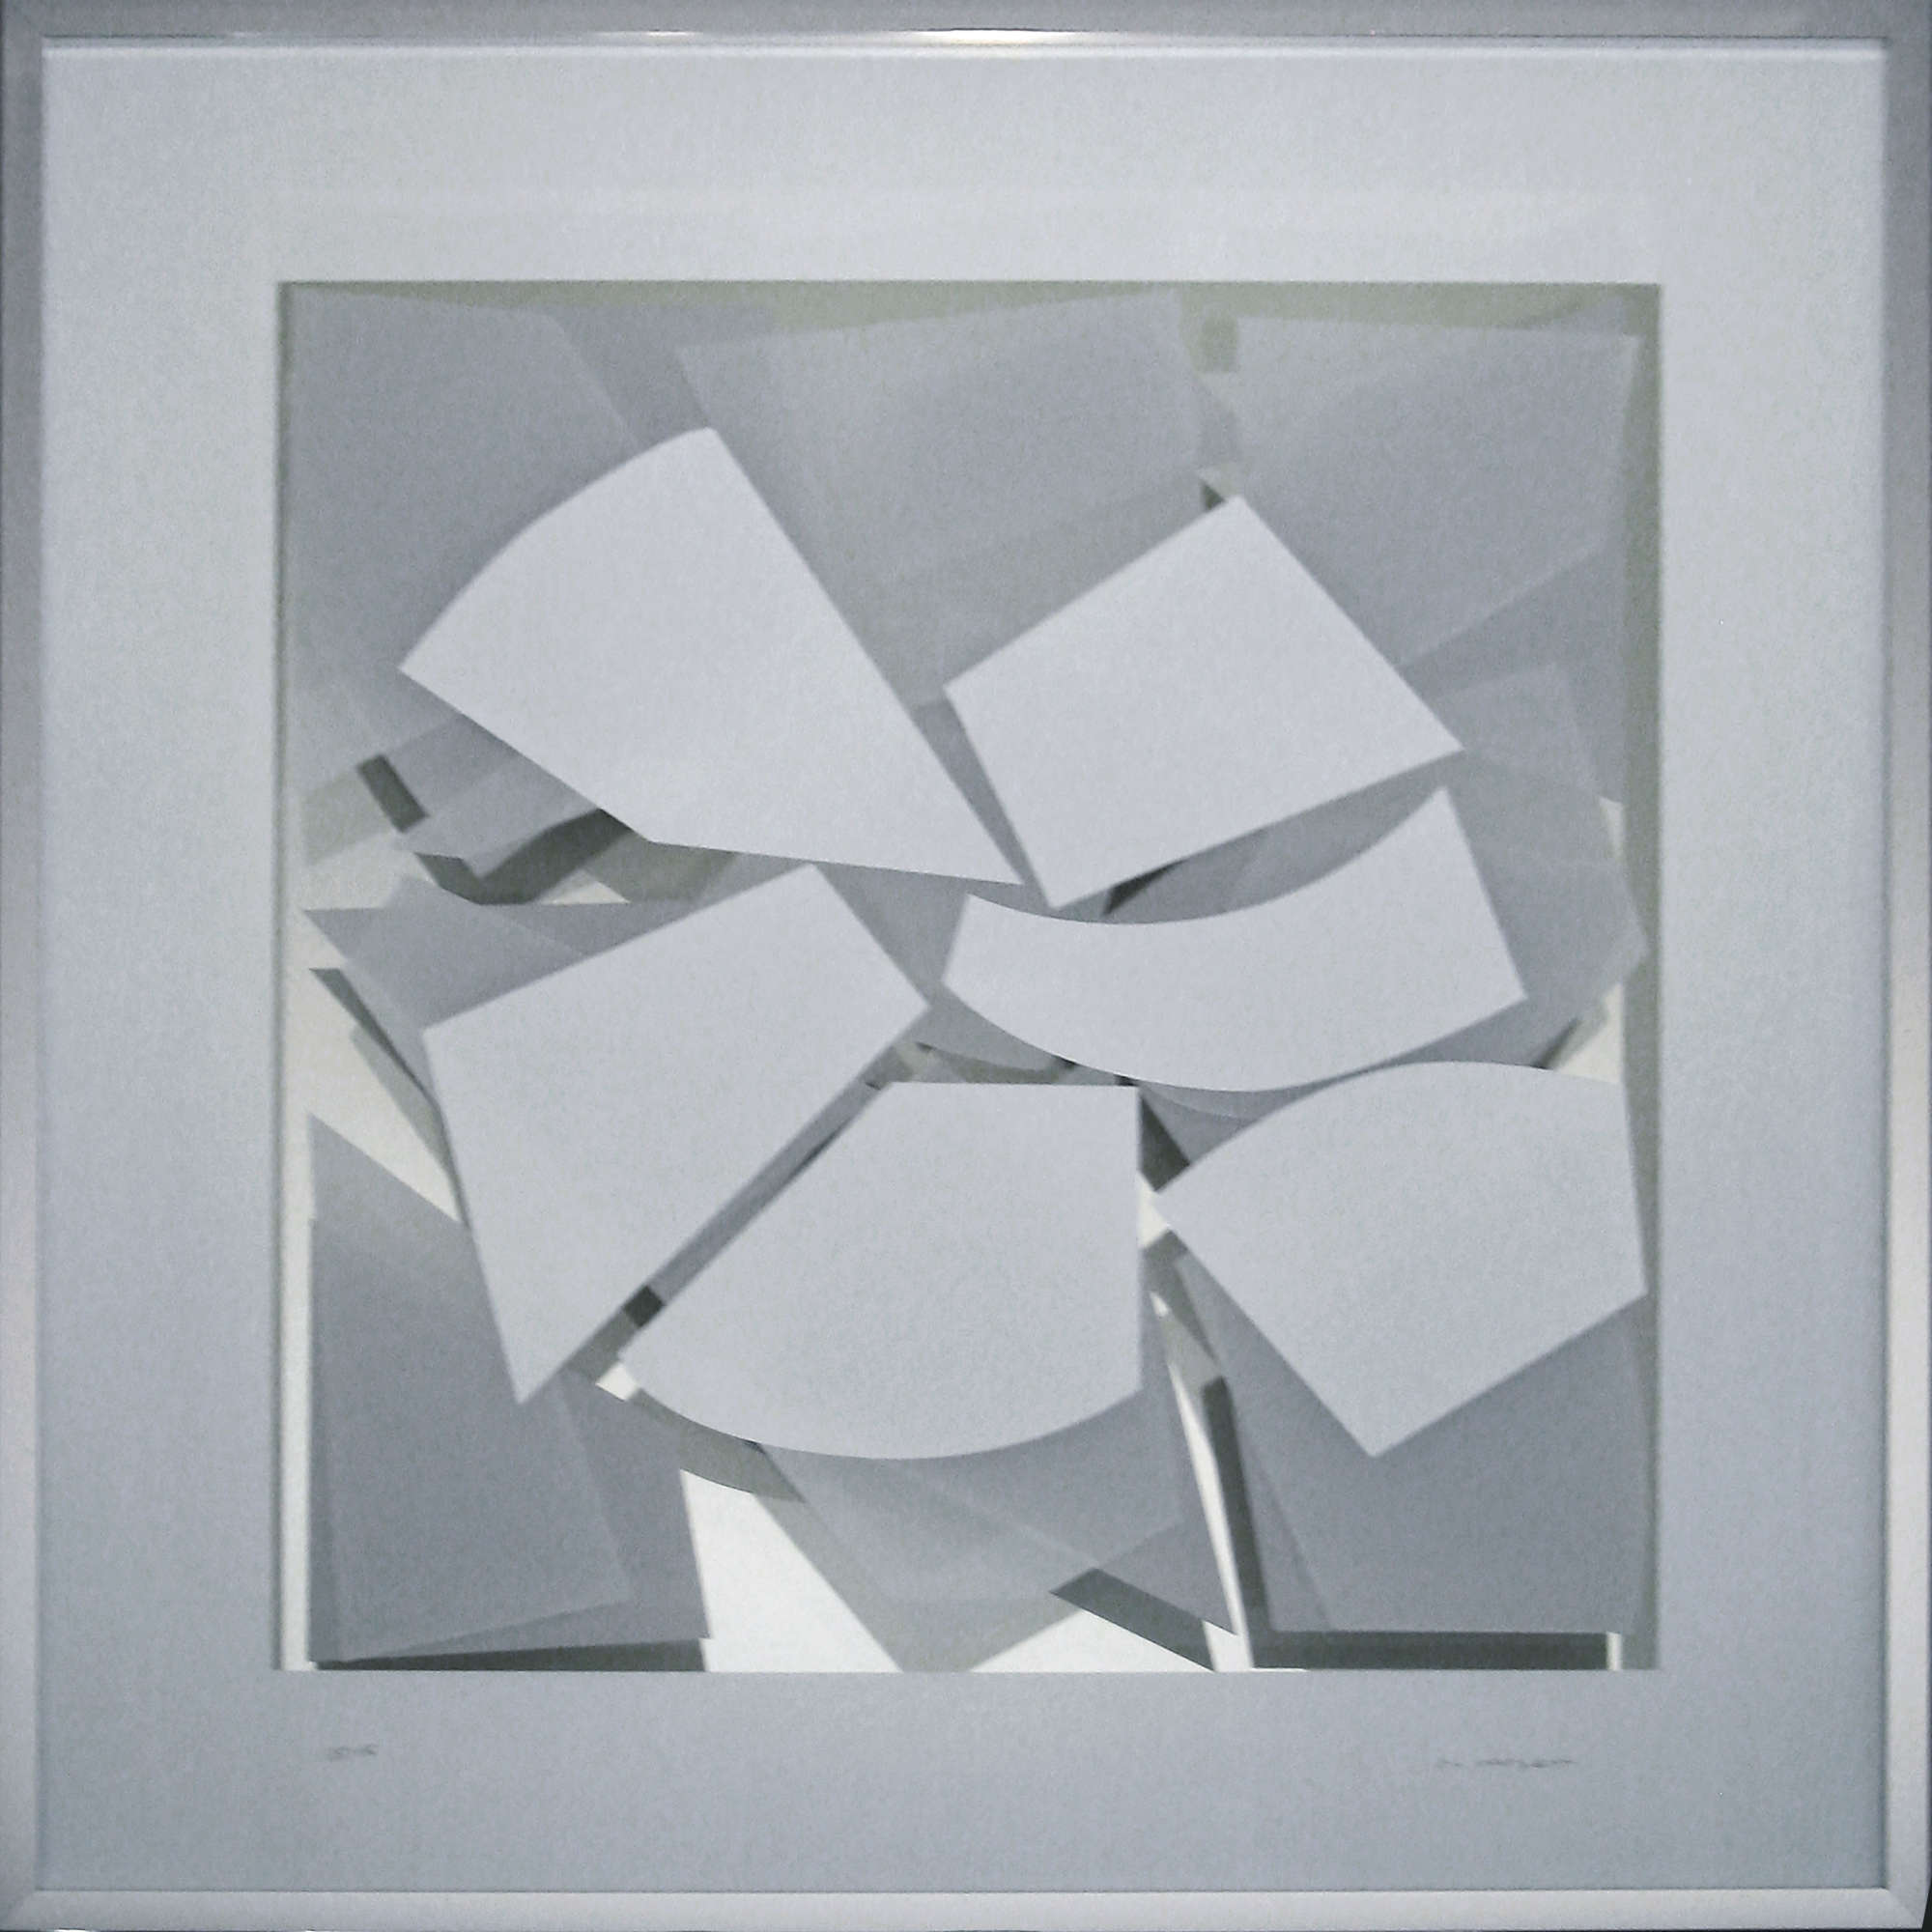 Spiegel im Quadrat 5, Weiß-Transparent